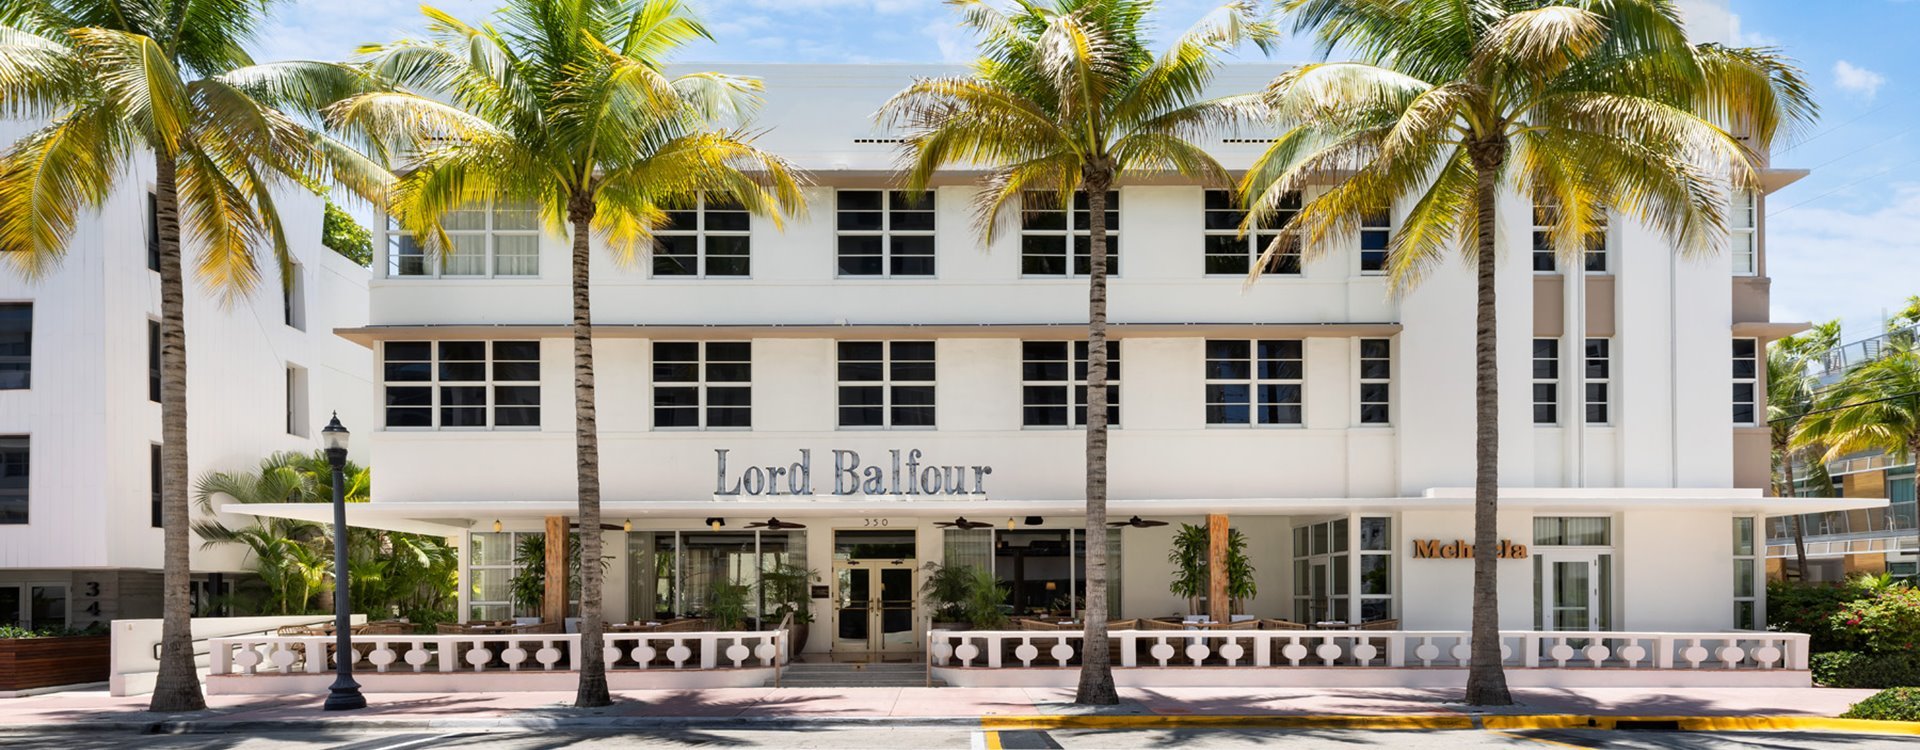 South Beach Miami Boutique Hotel - The Balfour Hotel